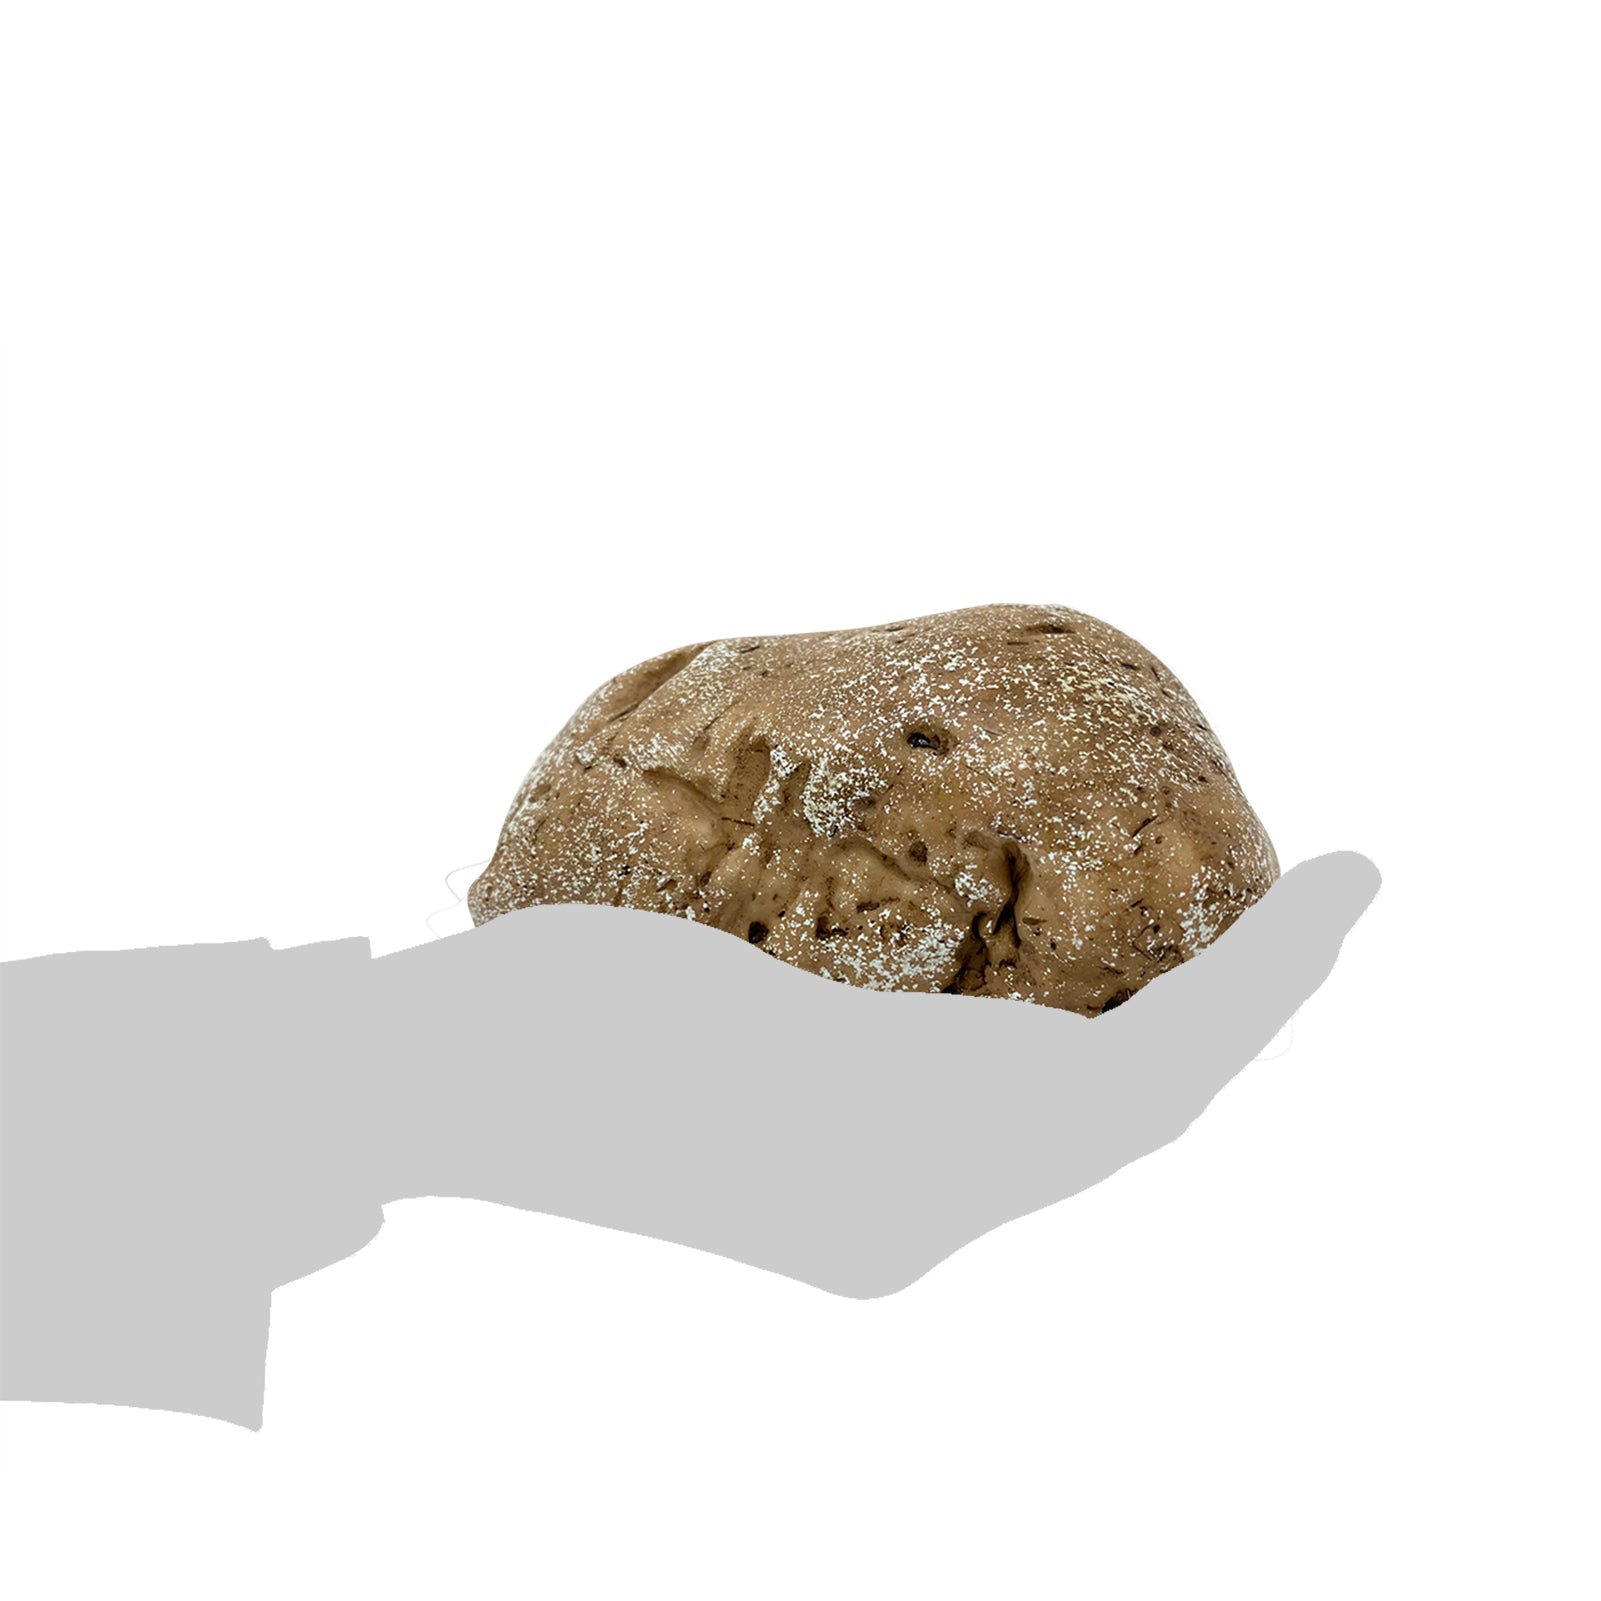 Hide-a-Spare-Key Fake Rock - Looks & Feels like Real Stone